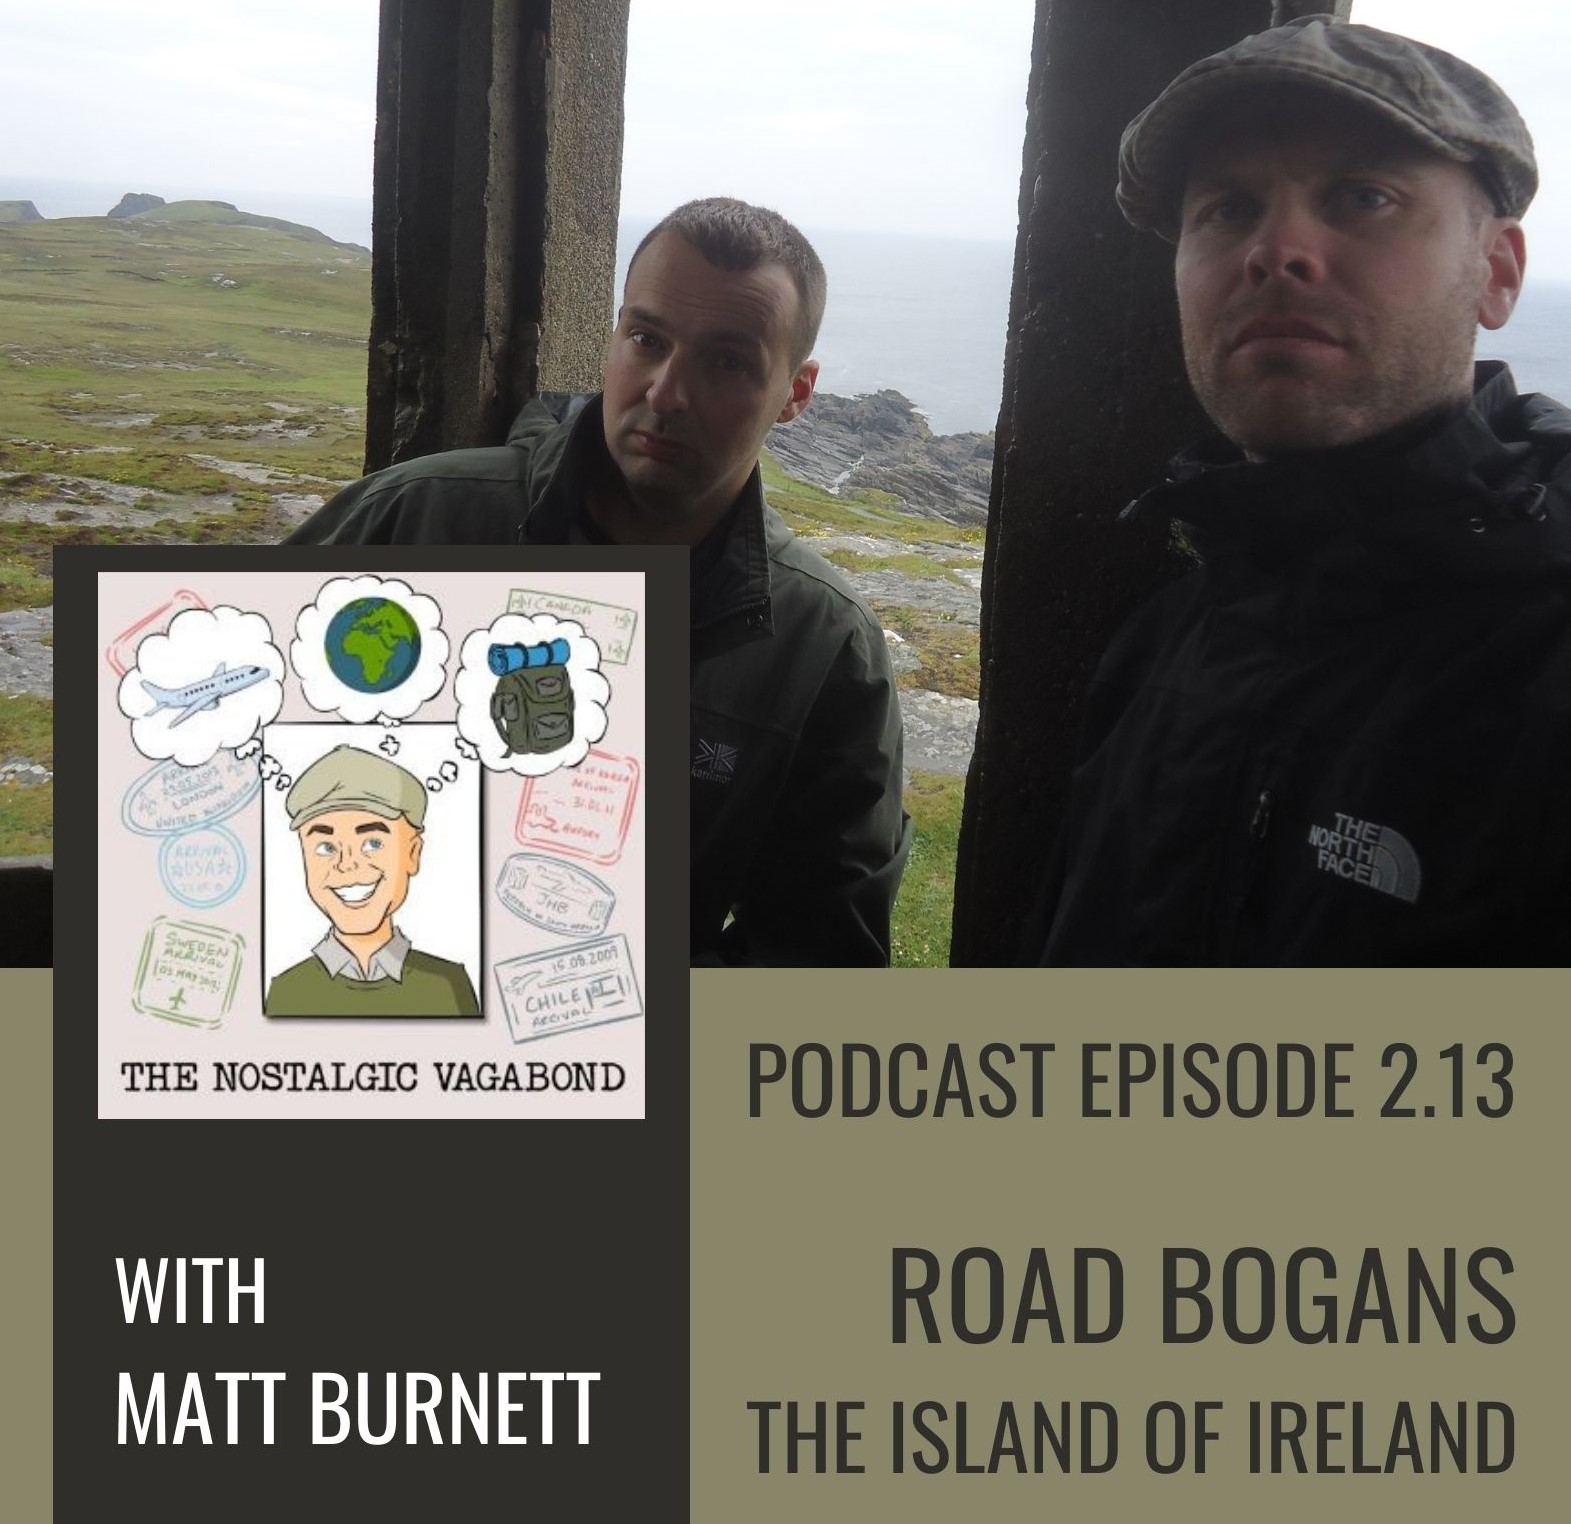 Road Bogans - The Island of Ireland